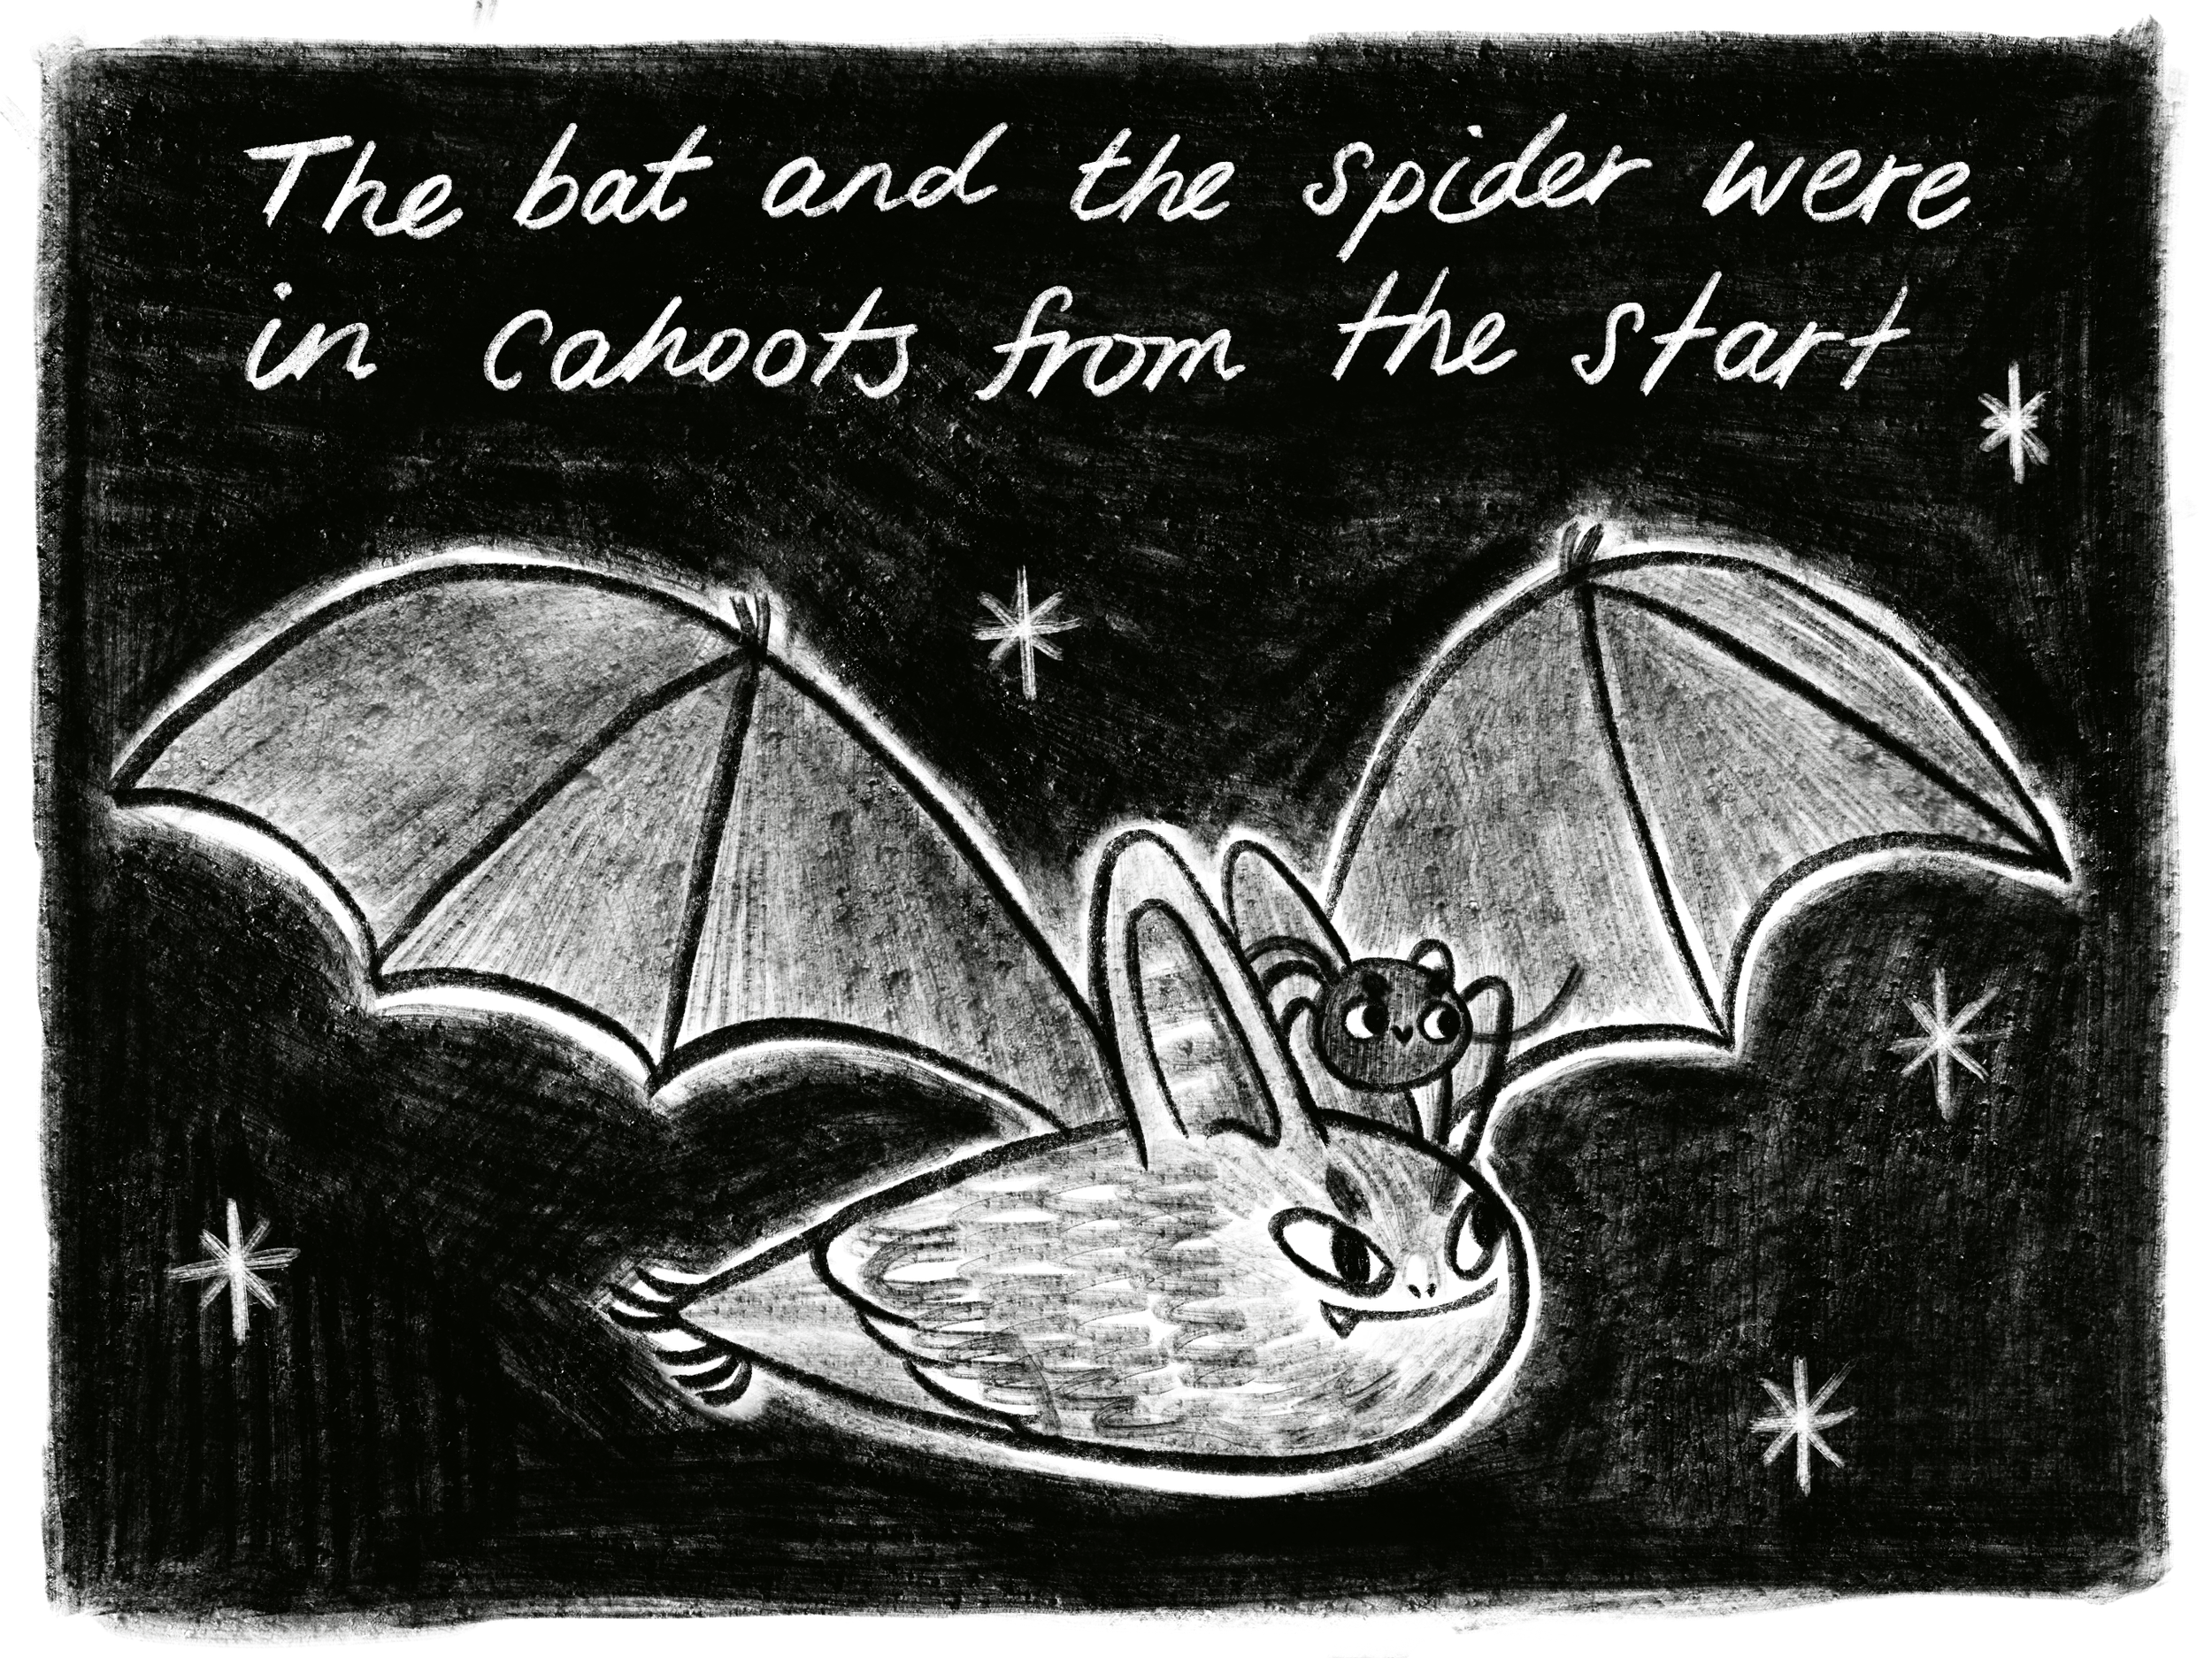 phoebe-morris-bat-and-spider.png